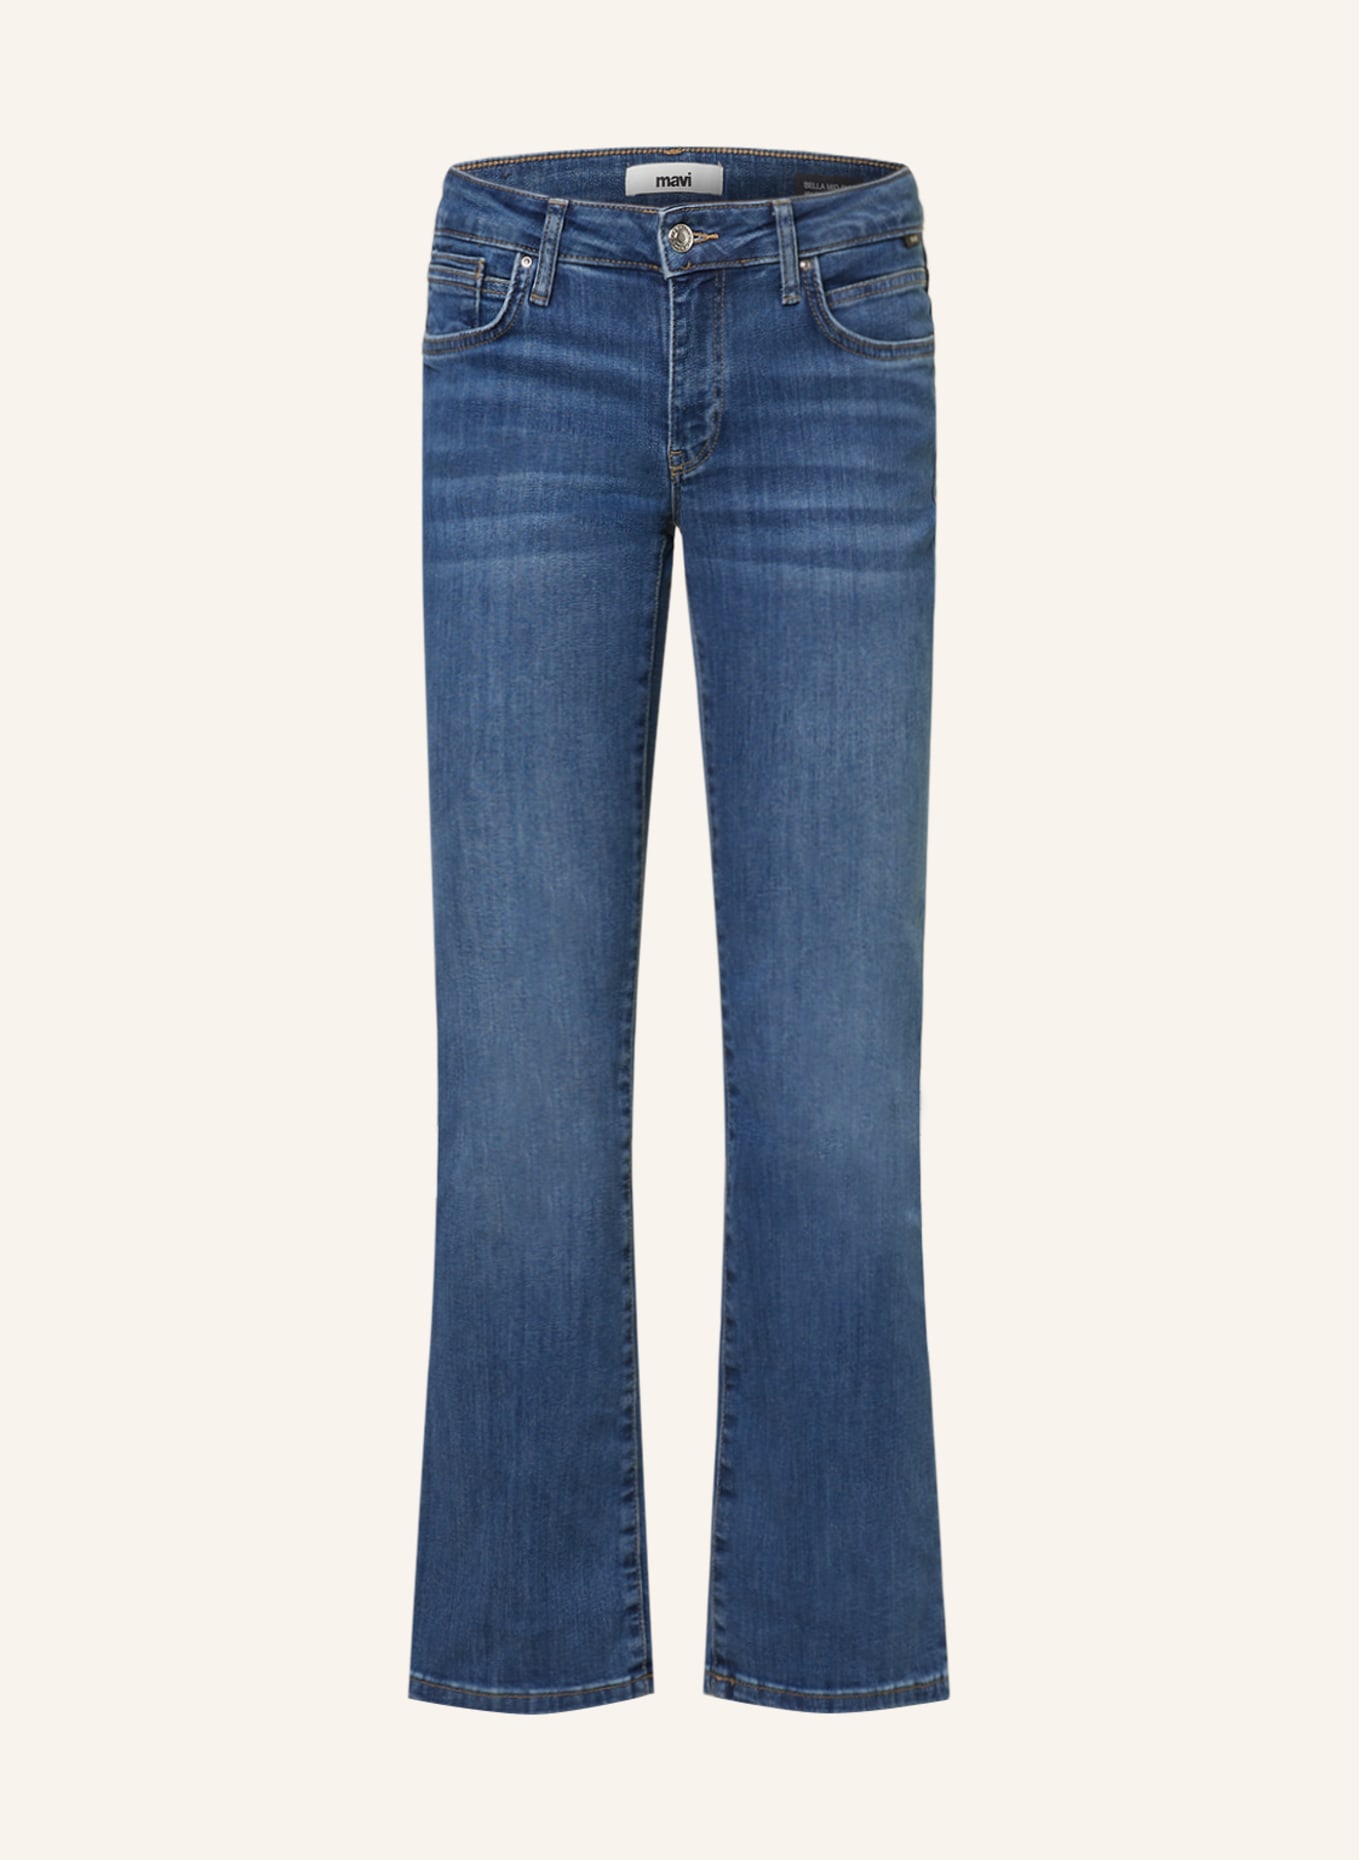 mavi Bootcut Jeans BELLA, Farbe: 84798 mid blue str (Bild 1)